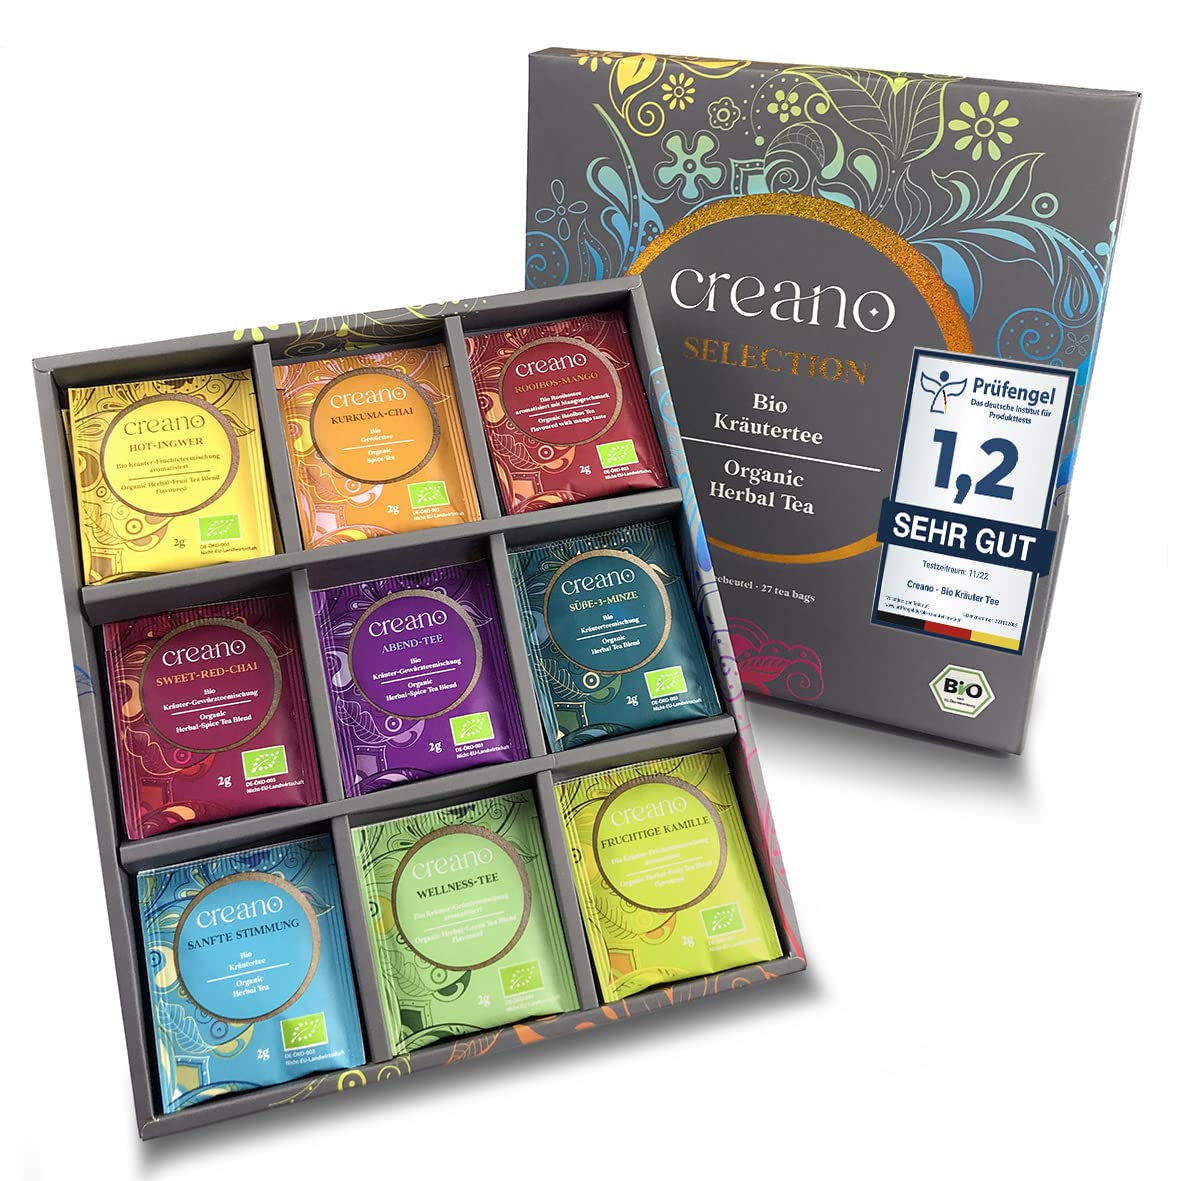 Creano Organic Herbal Tea Gift Set